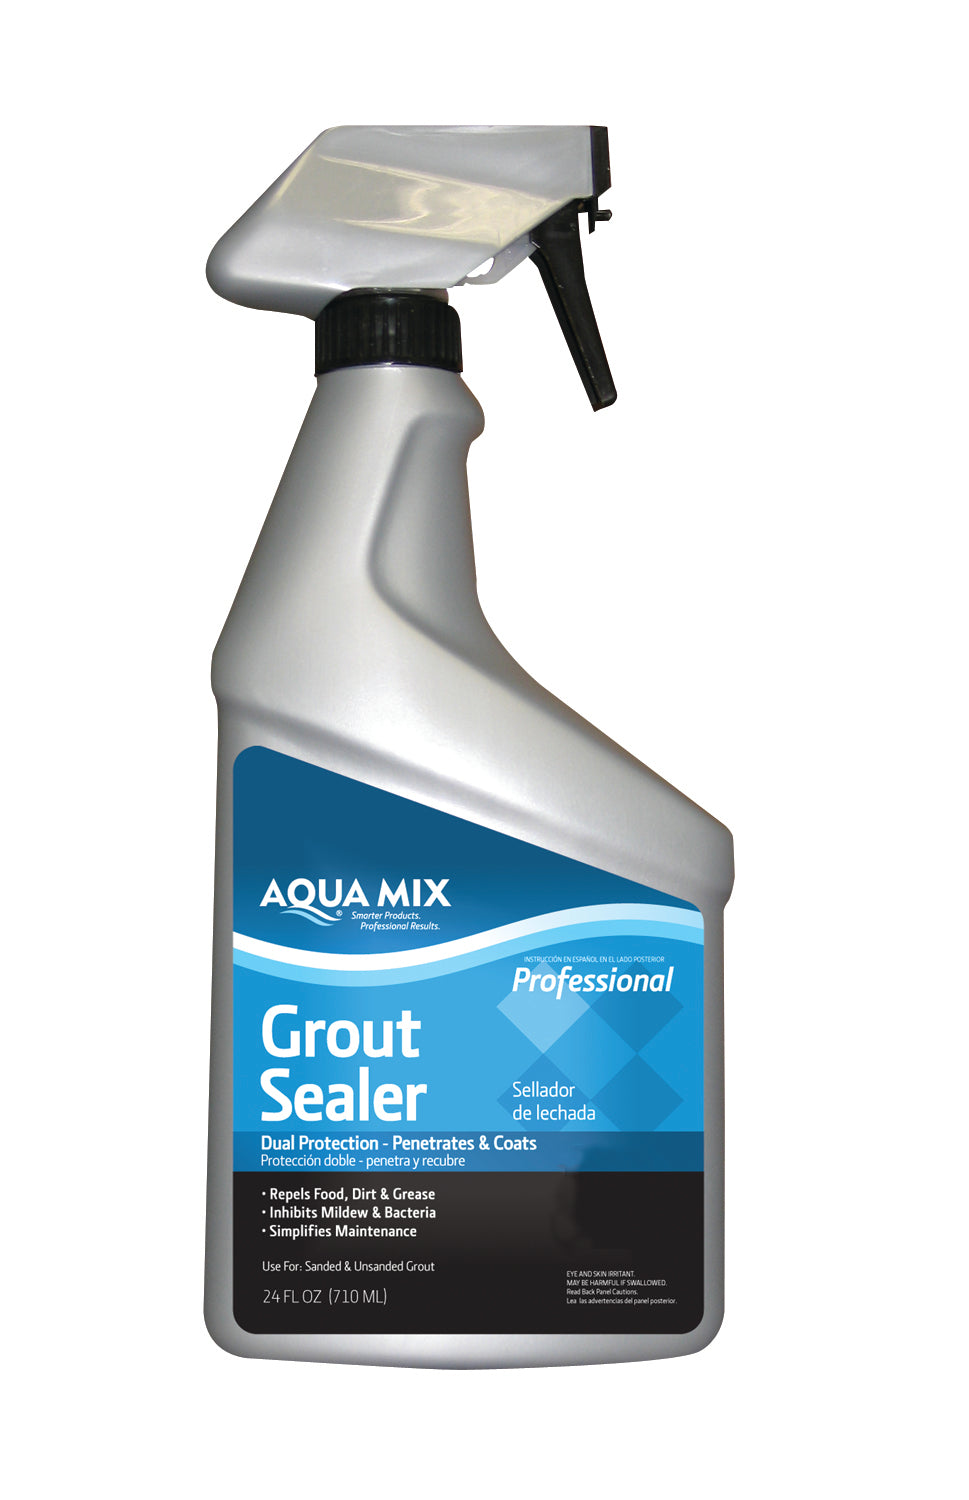 Premium Sealer for Stone, Tile, Grout – Aqua-Seal Gold+ ® Sealers Plus